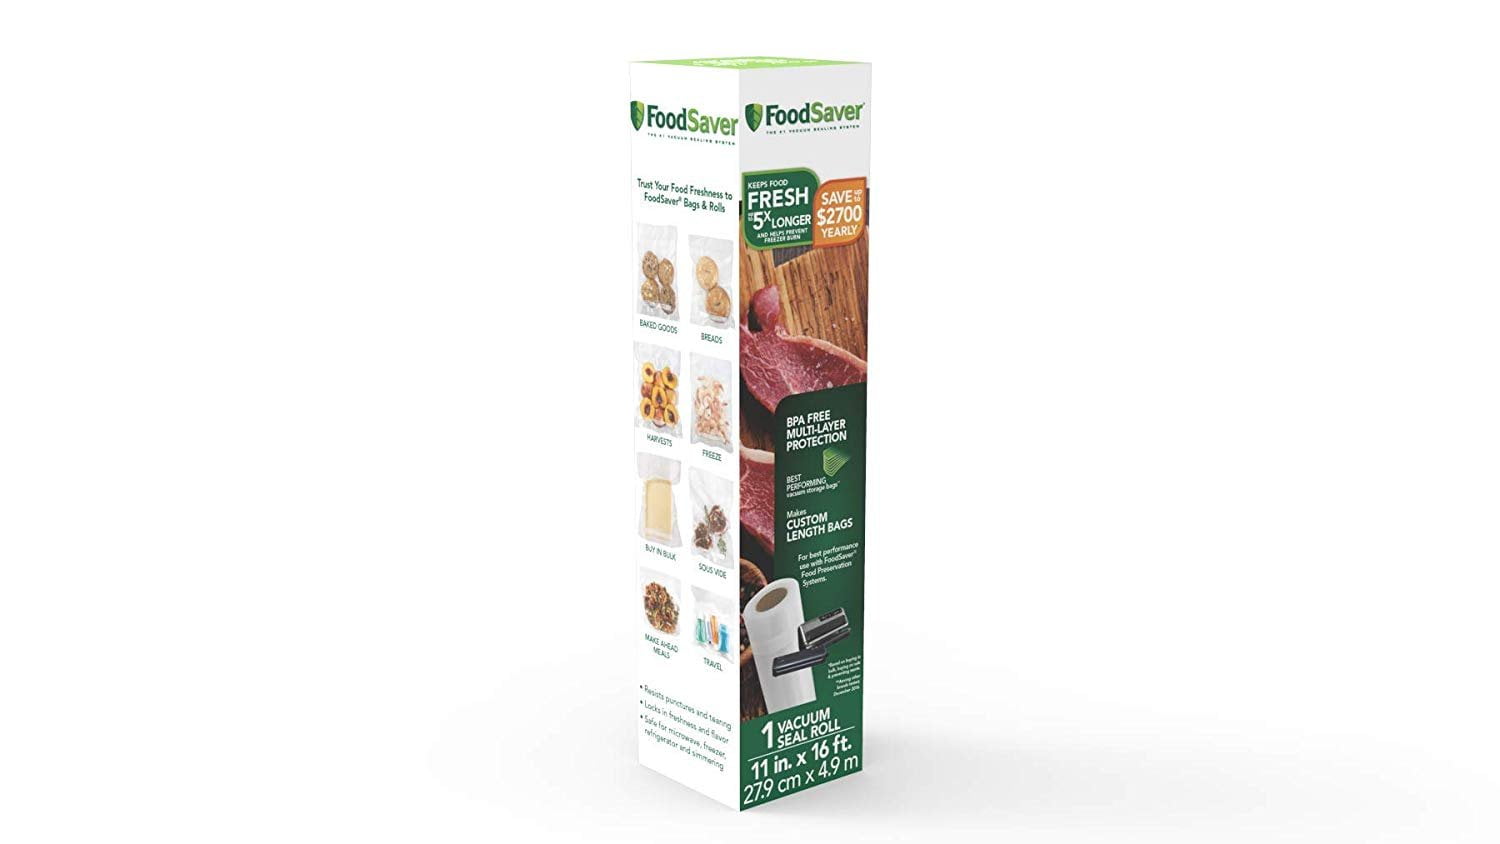 FoodSaver Heat-Seal Rolls, 11 Inch, Baking & Food Storage